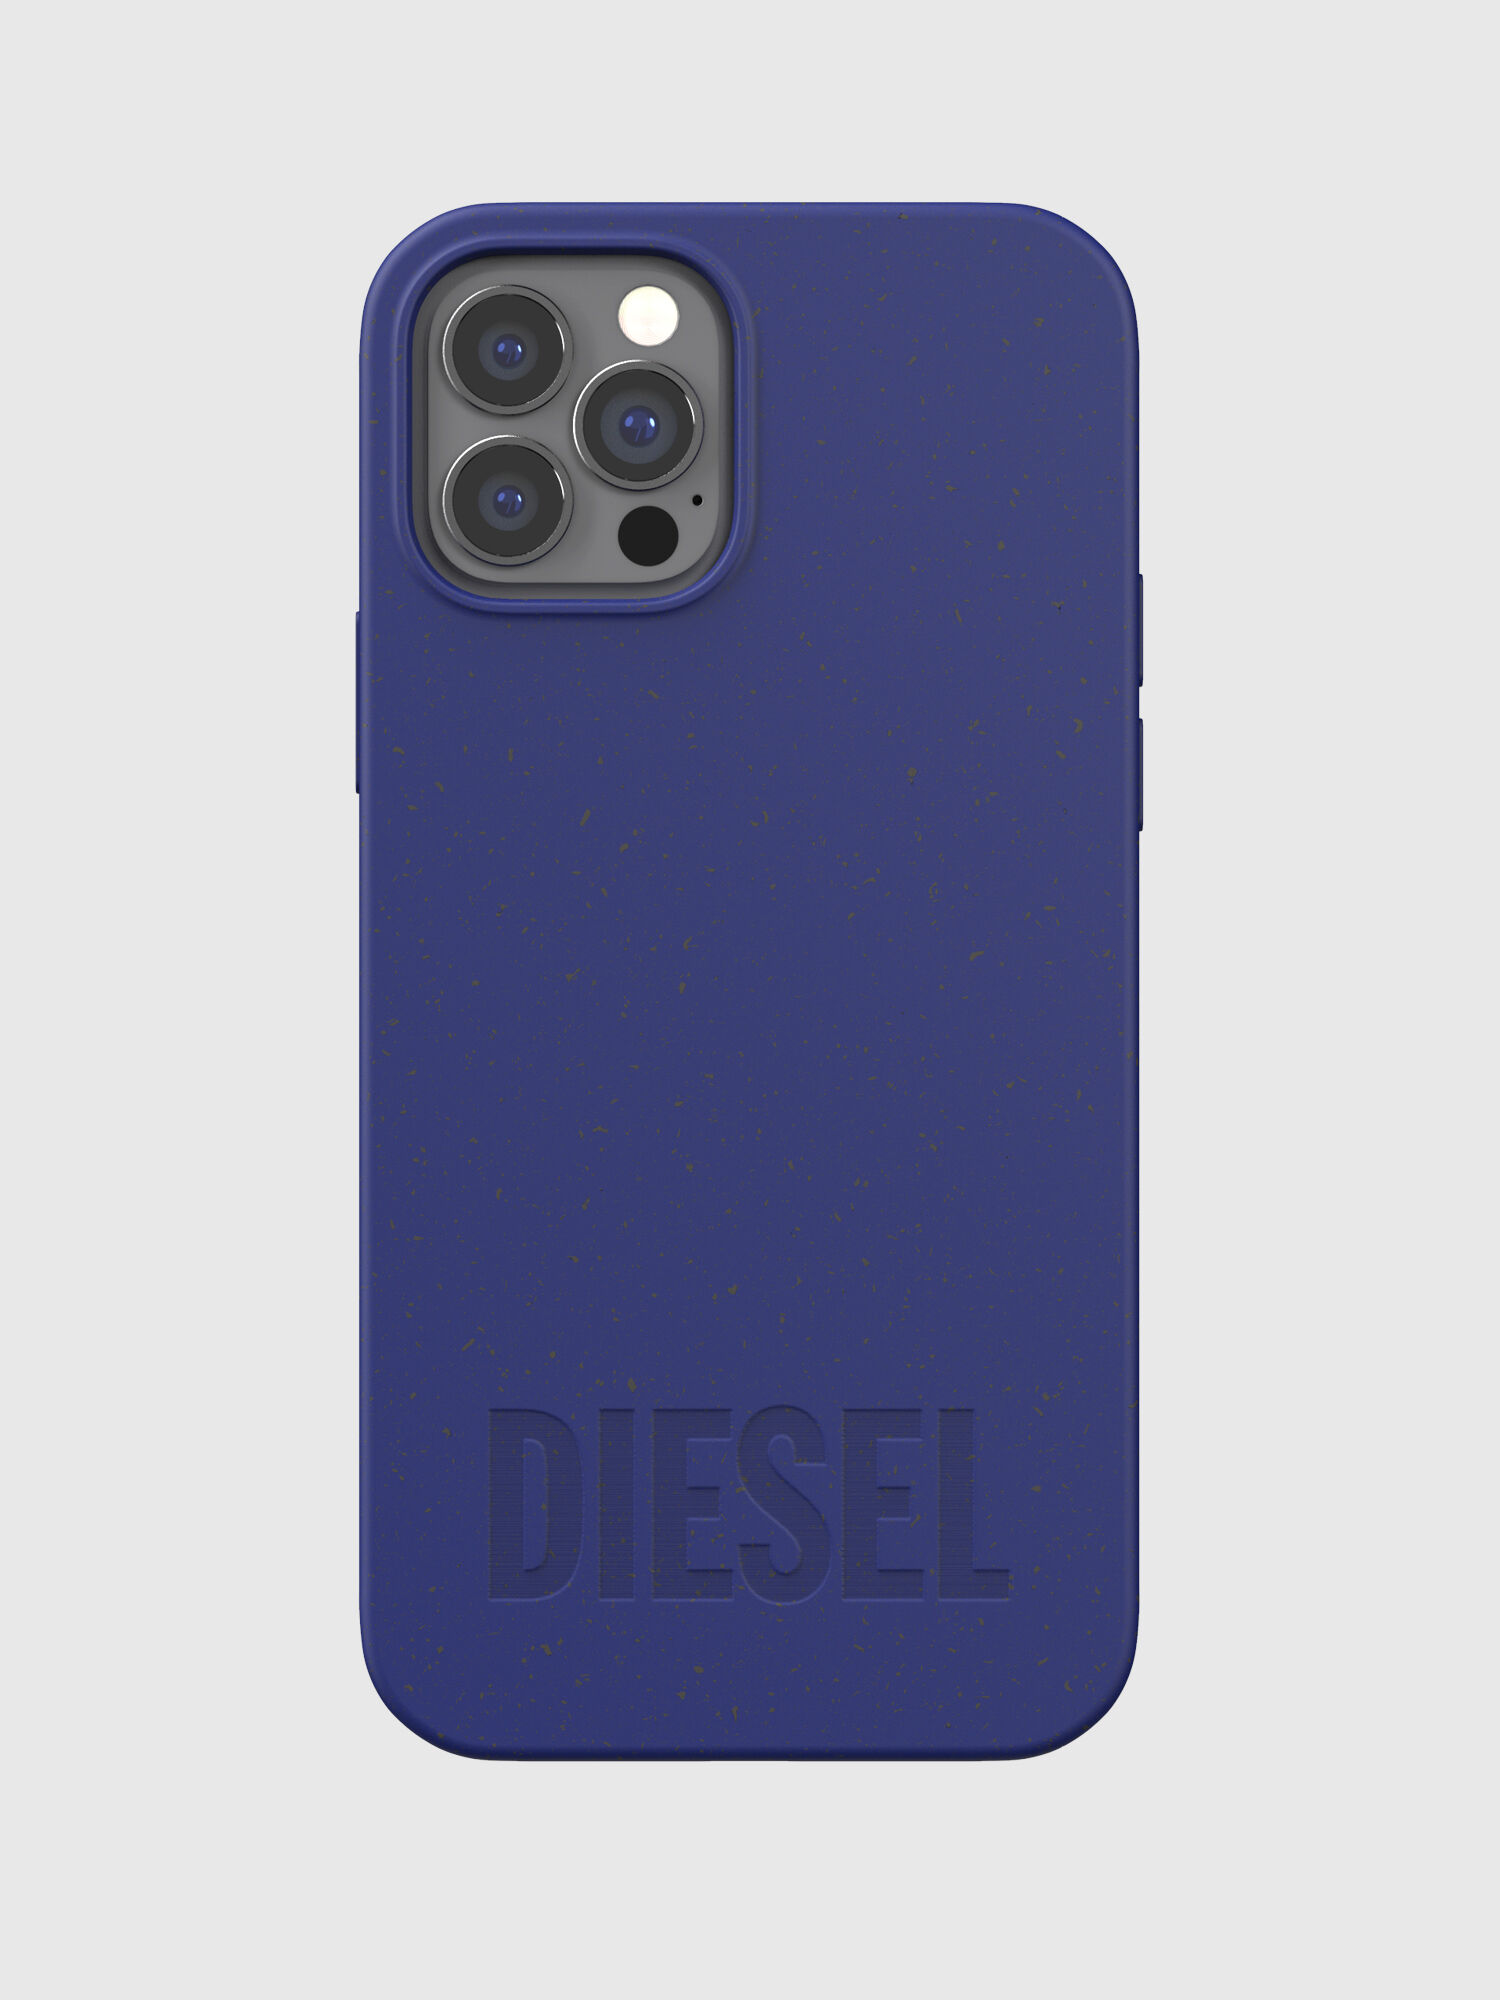 Diesel - 44303  STANDARD CASES, Dark Violet - Image 2